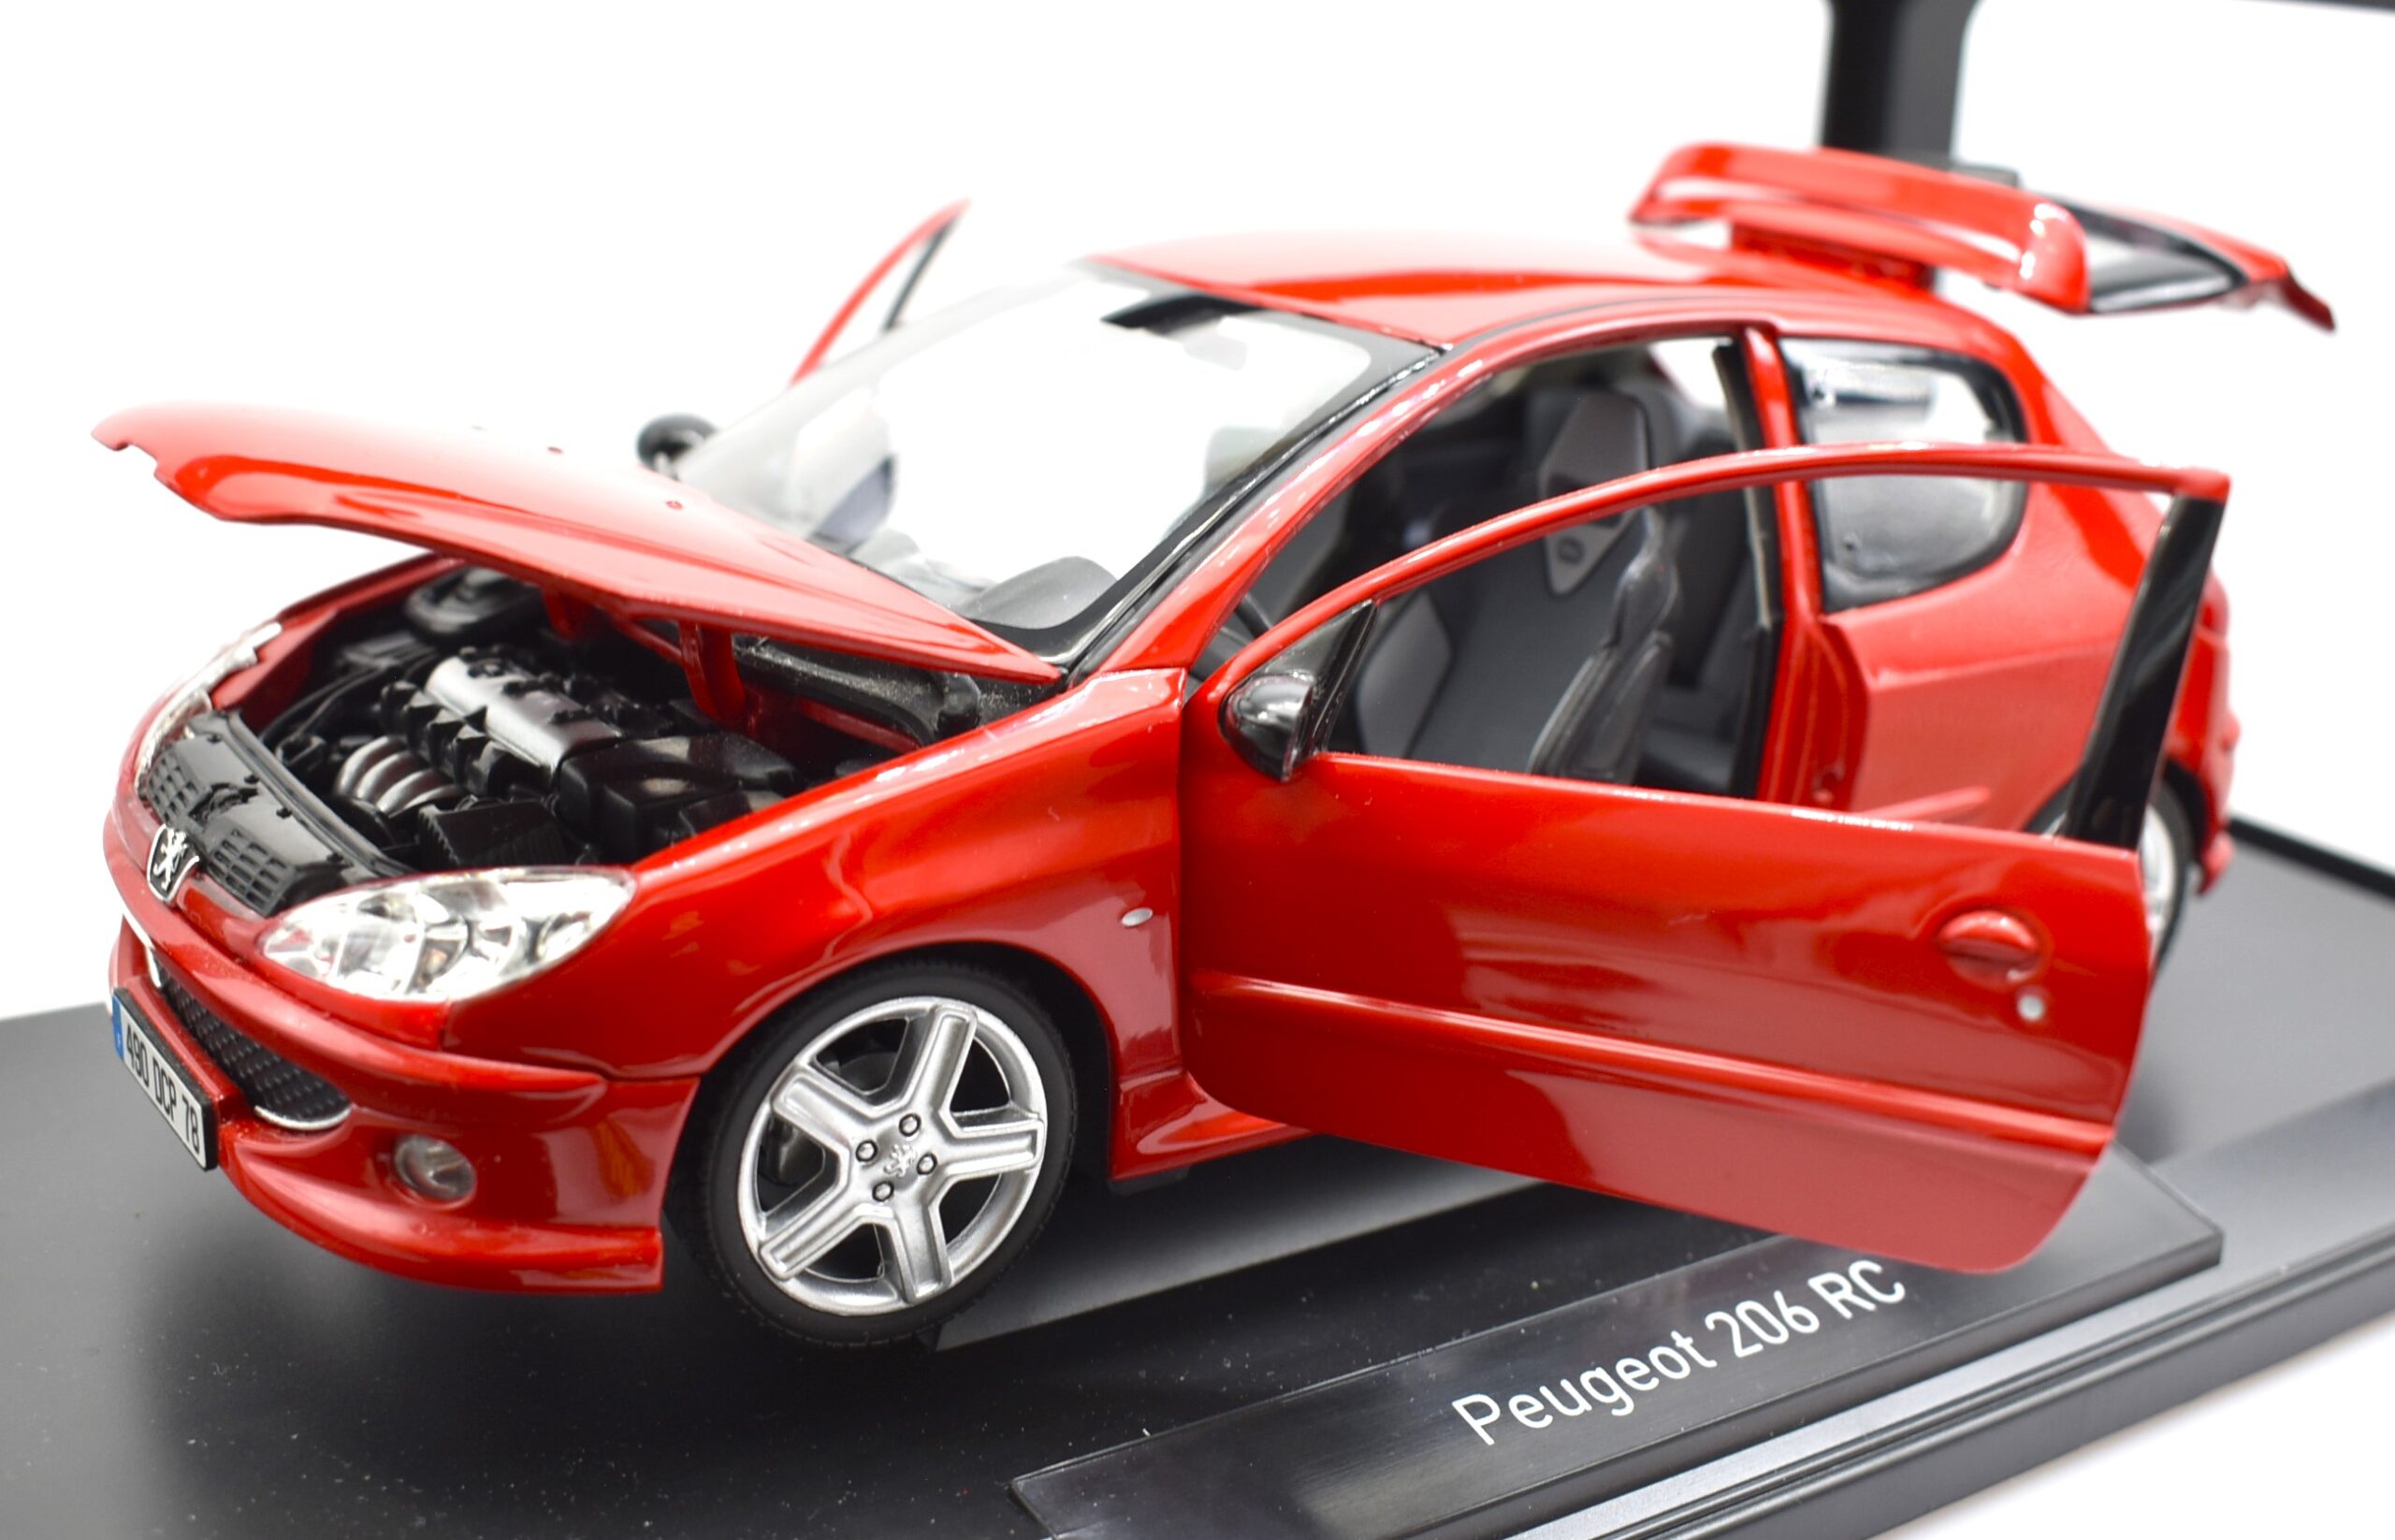 modellauto Auto Maßstab 1:18 Peugeot 206 RC Norev diecastmodellbau aussammlung